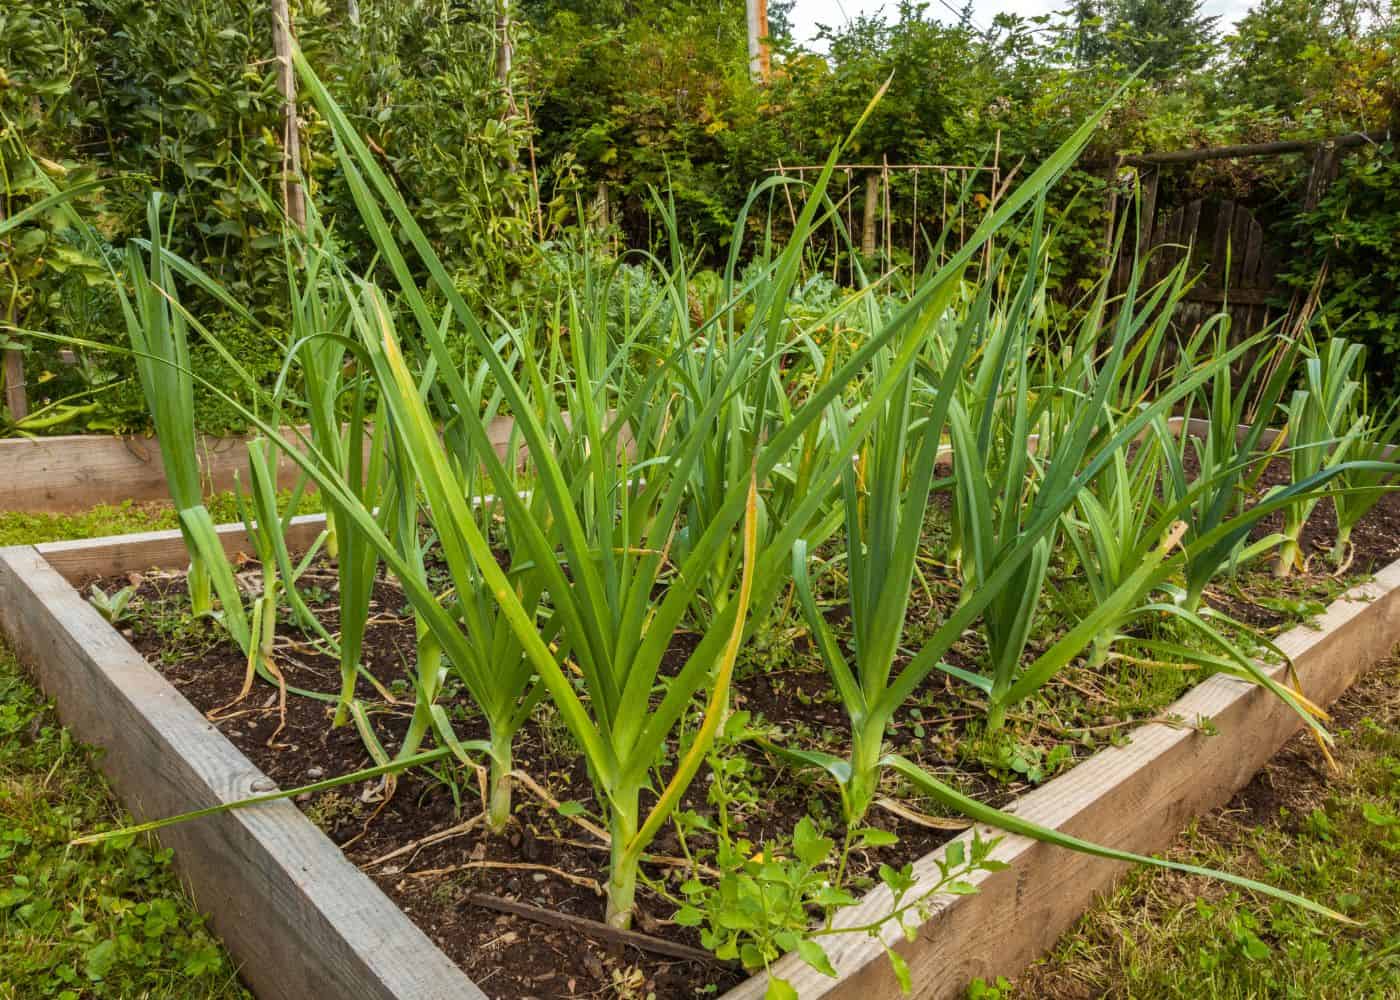 Onion plants in the garden